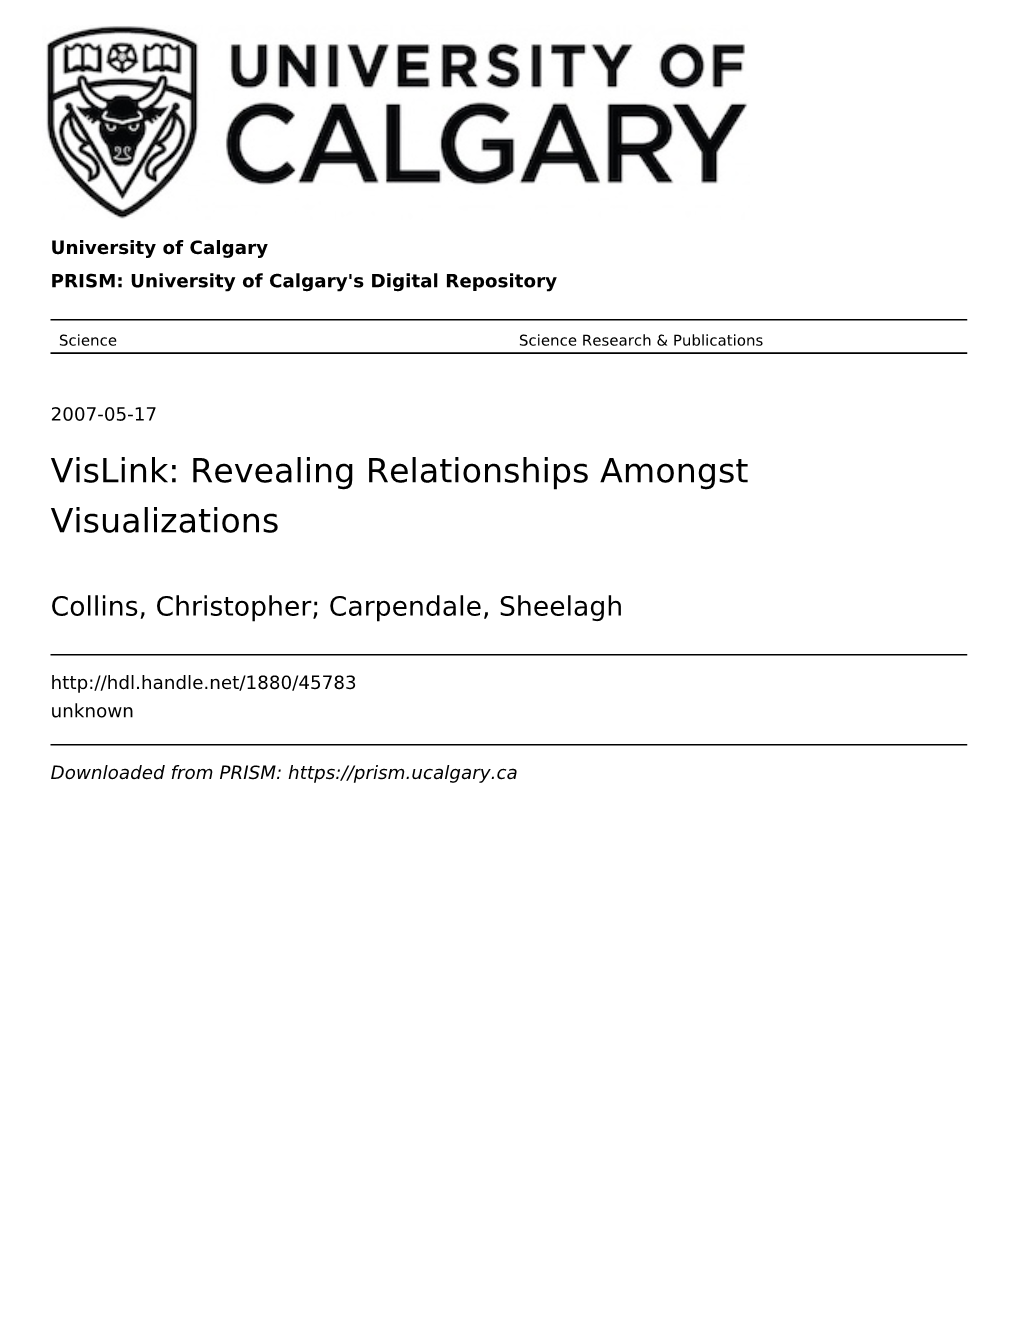 Vislink: Revealing Relationships Amongst Visualizations